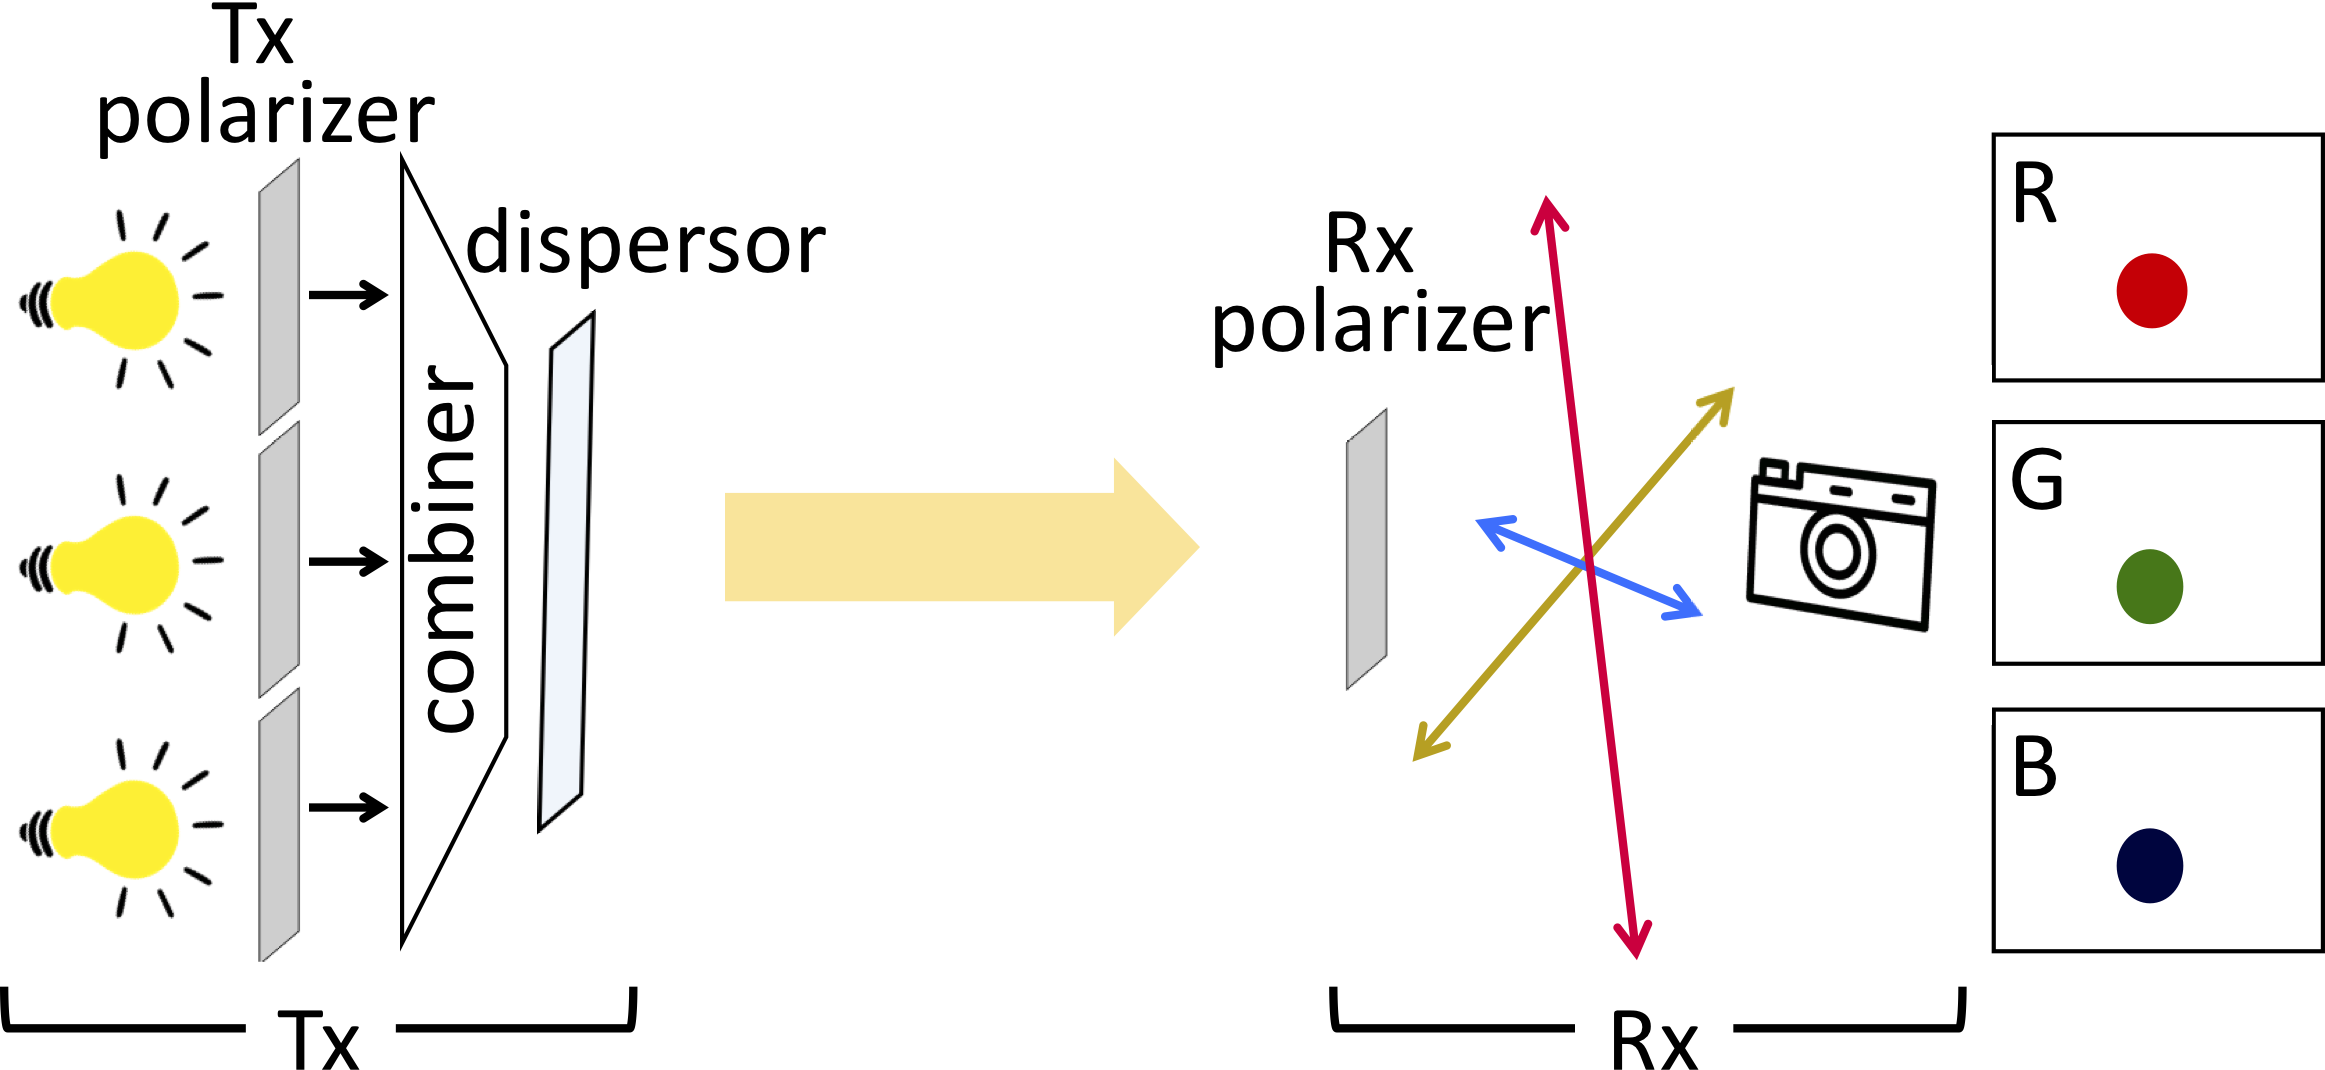 POLI - Long-Range Visible Light Communications Using Polarized Light Intensity Modulation [MobiSys'17]